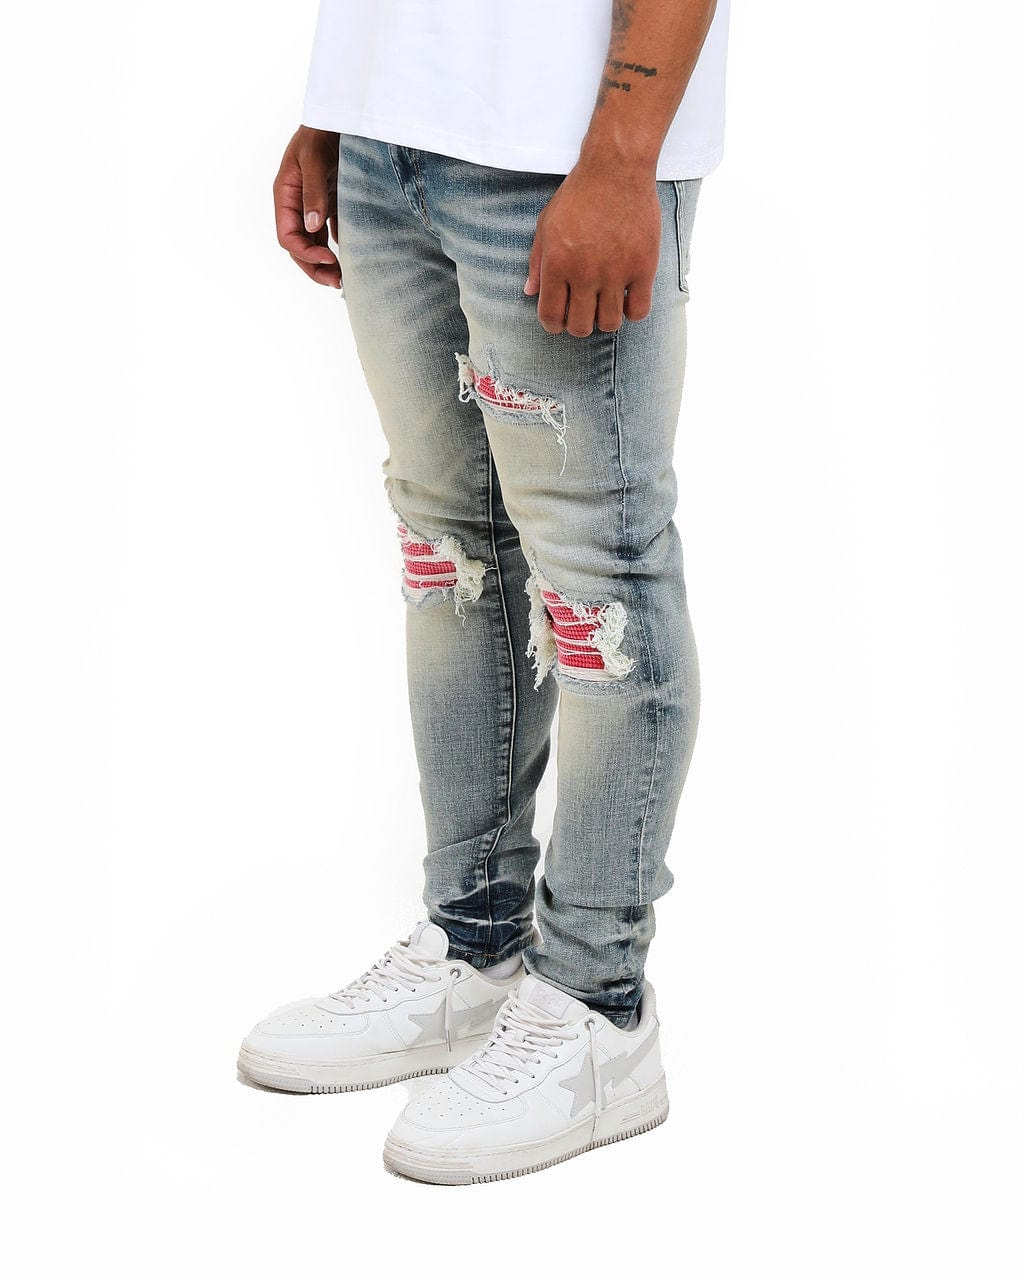 Amicci Premium Quality Men's Ripped Denim Jeans - Italian Styling